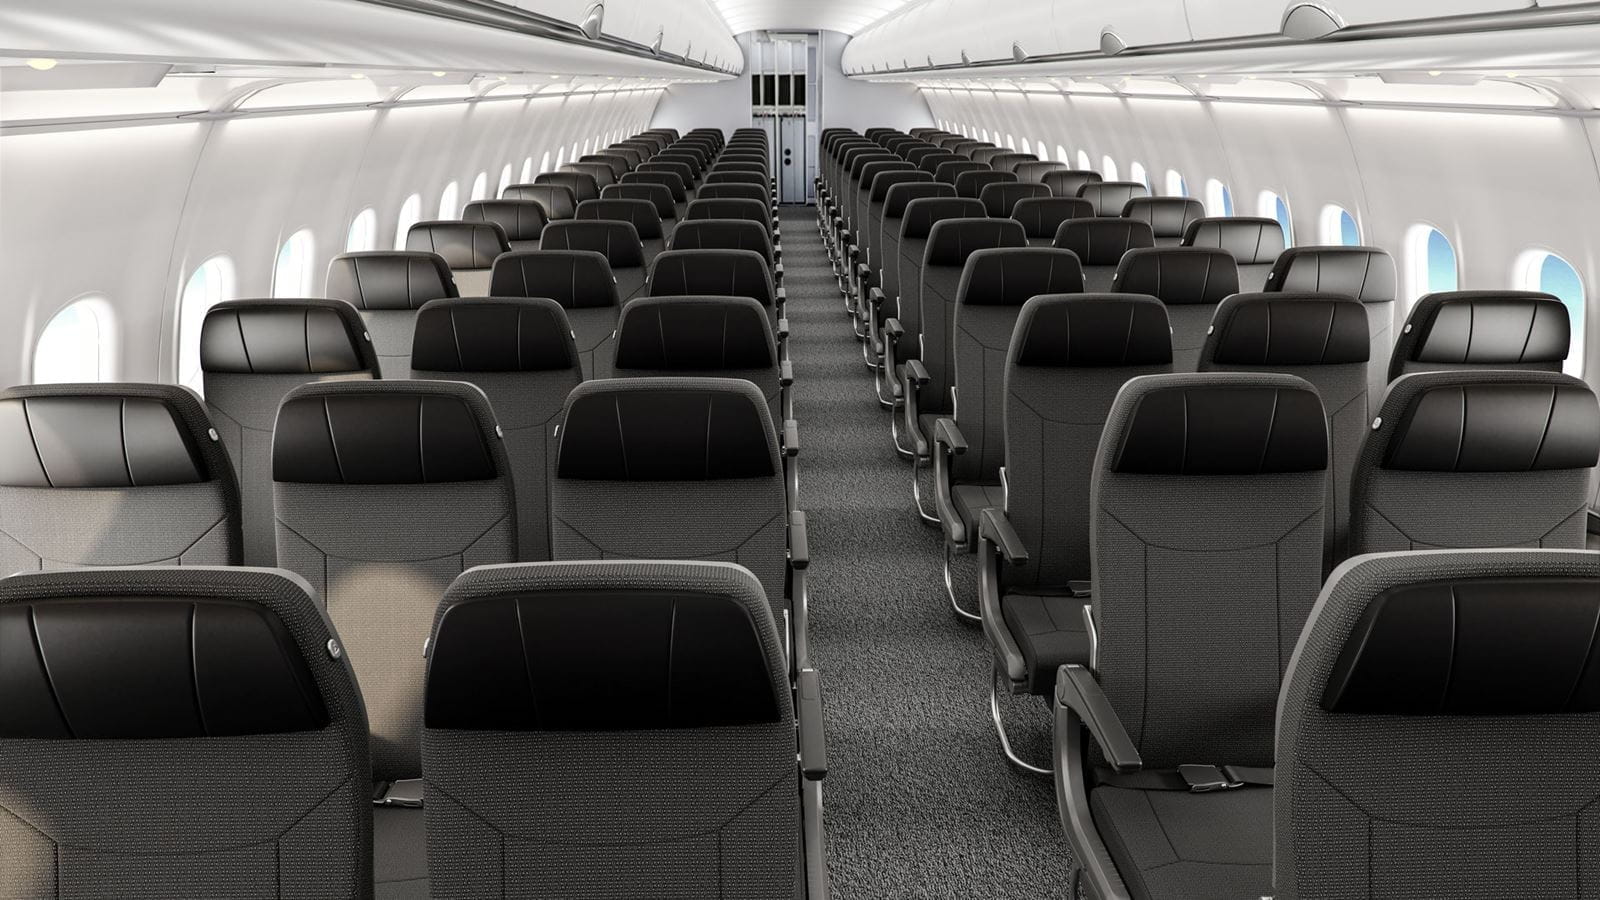 inside airplane cabin passenger seats